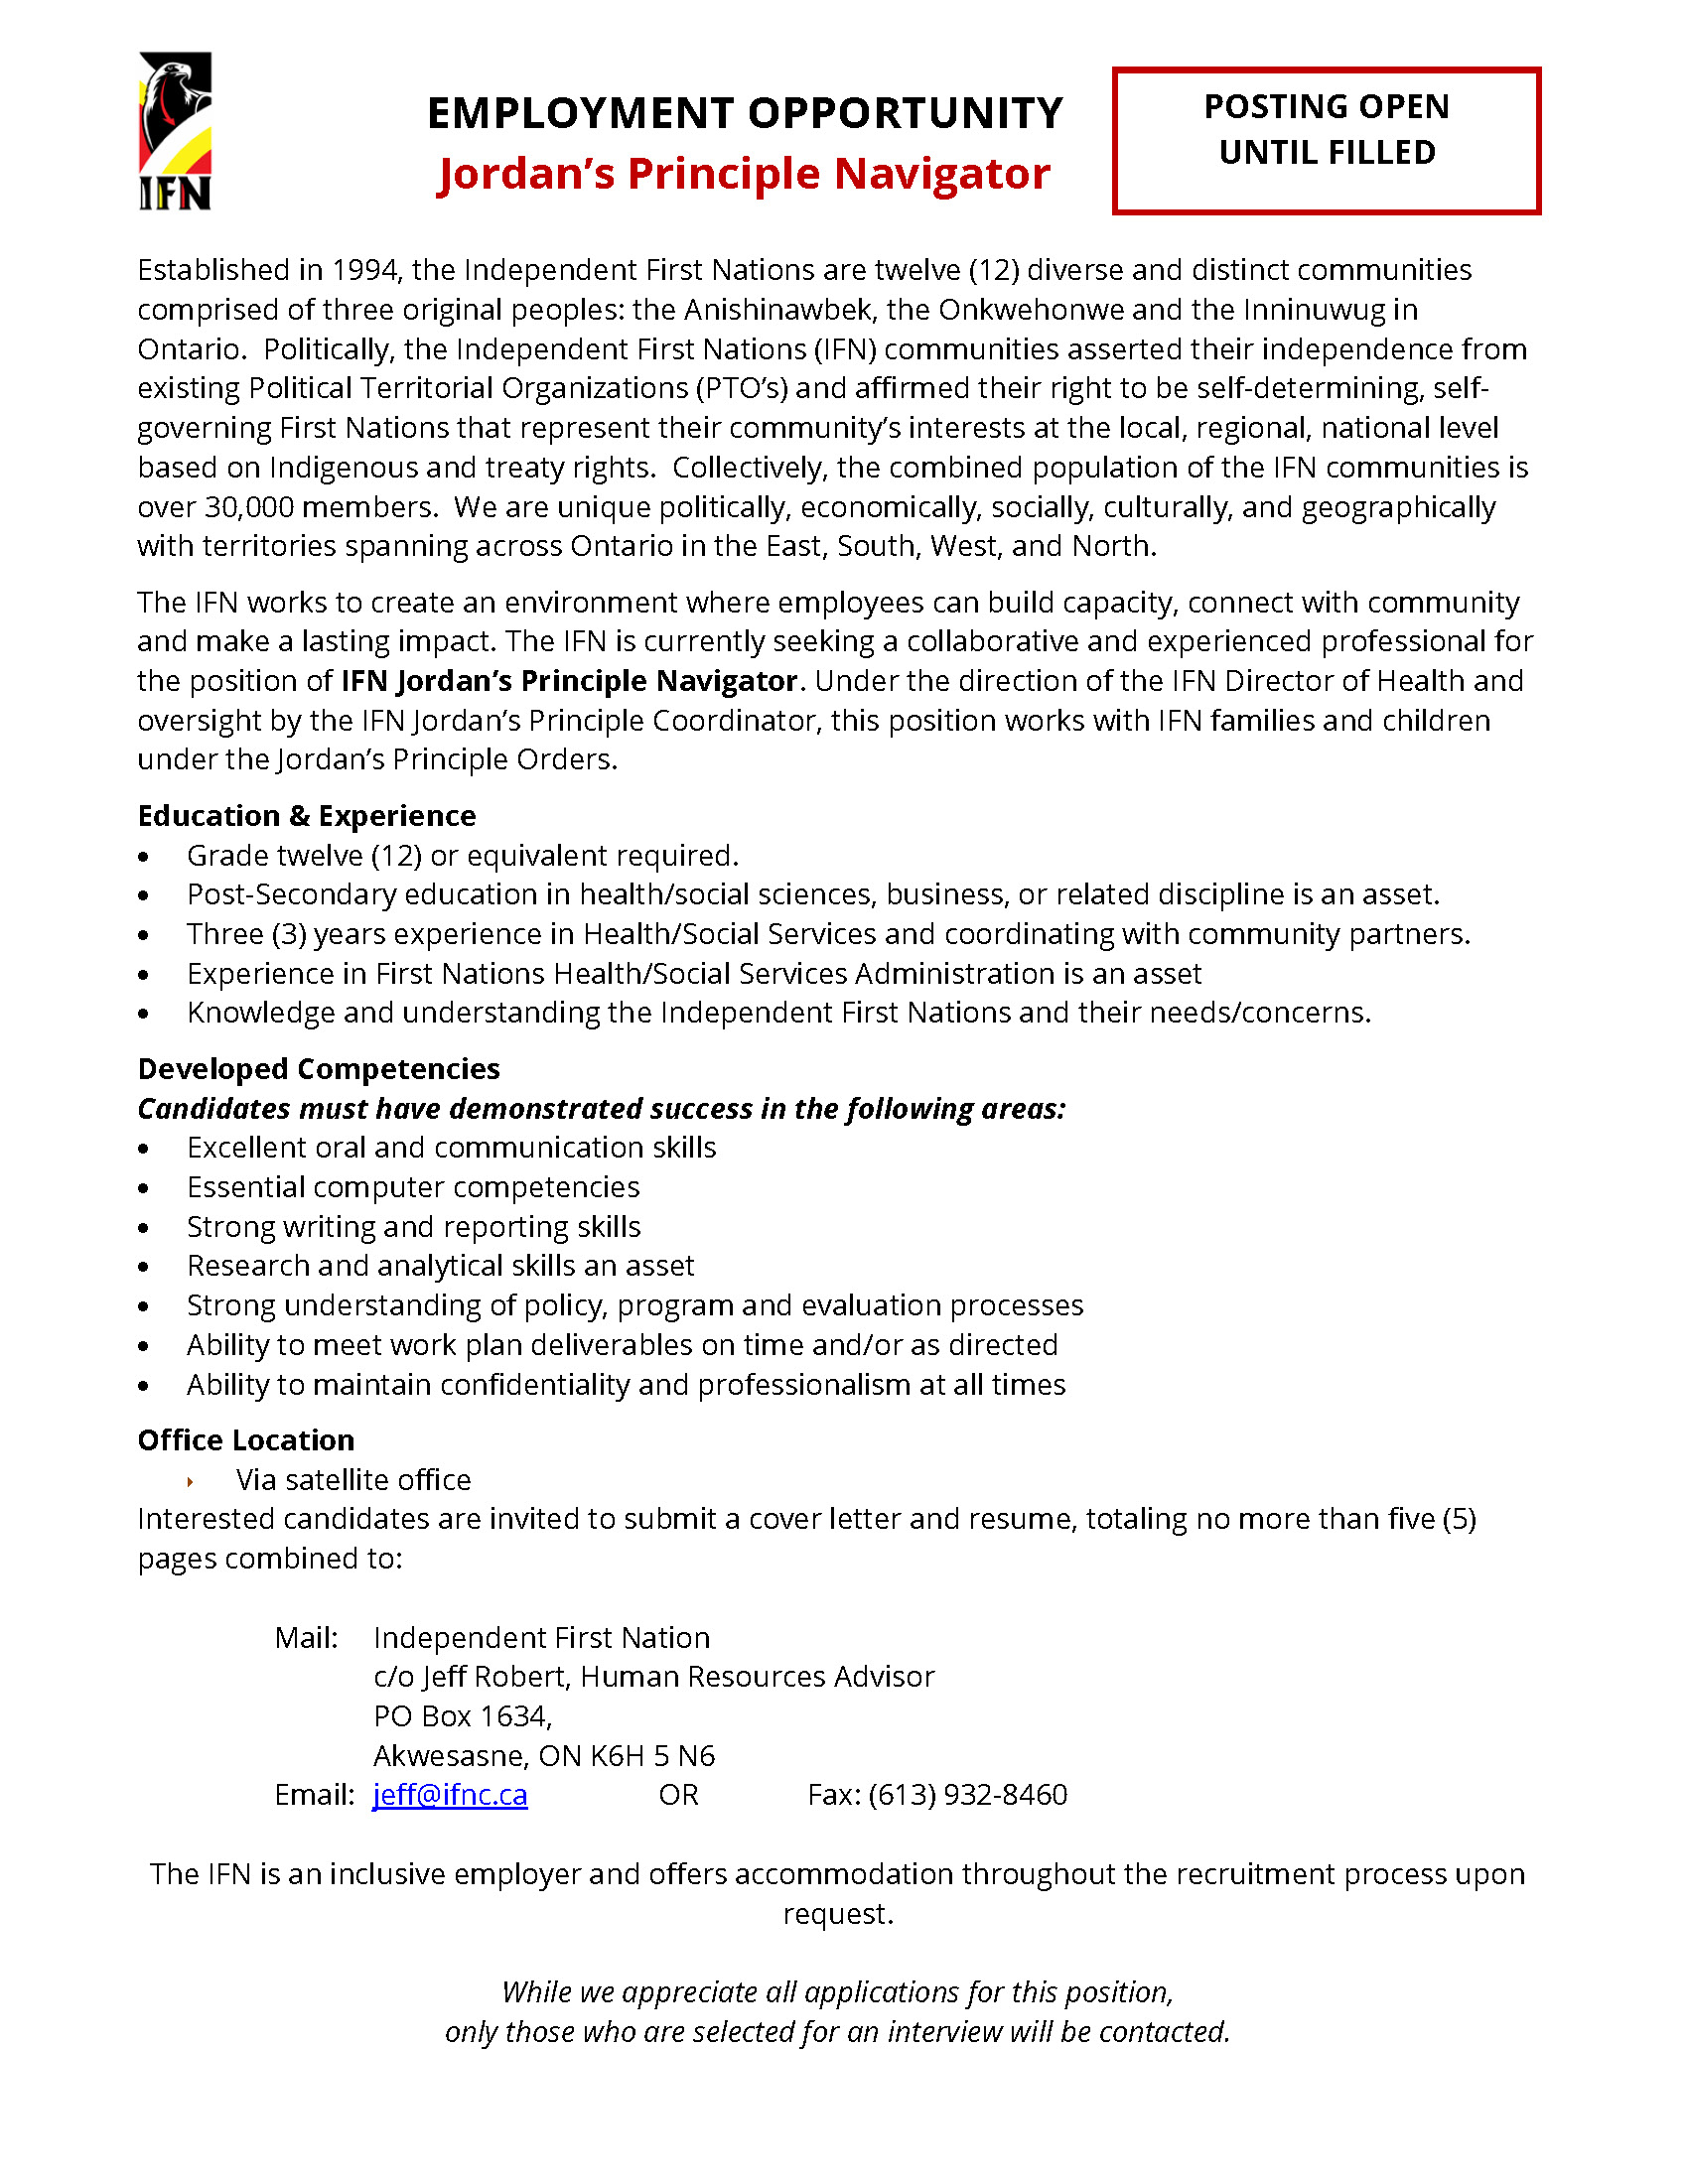 IFN HR Advisor - Job Posting Closing Jan 3, 2022